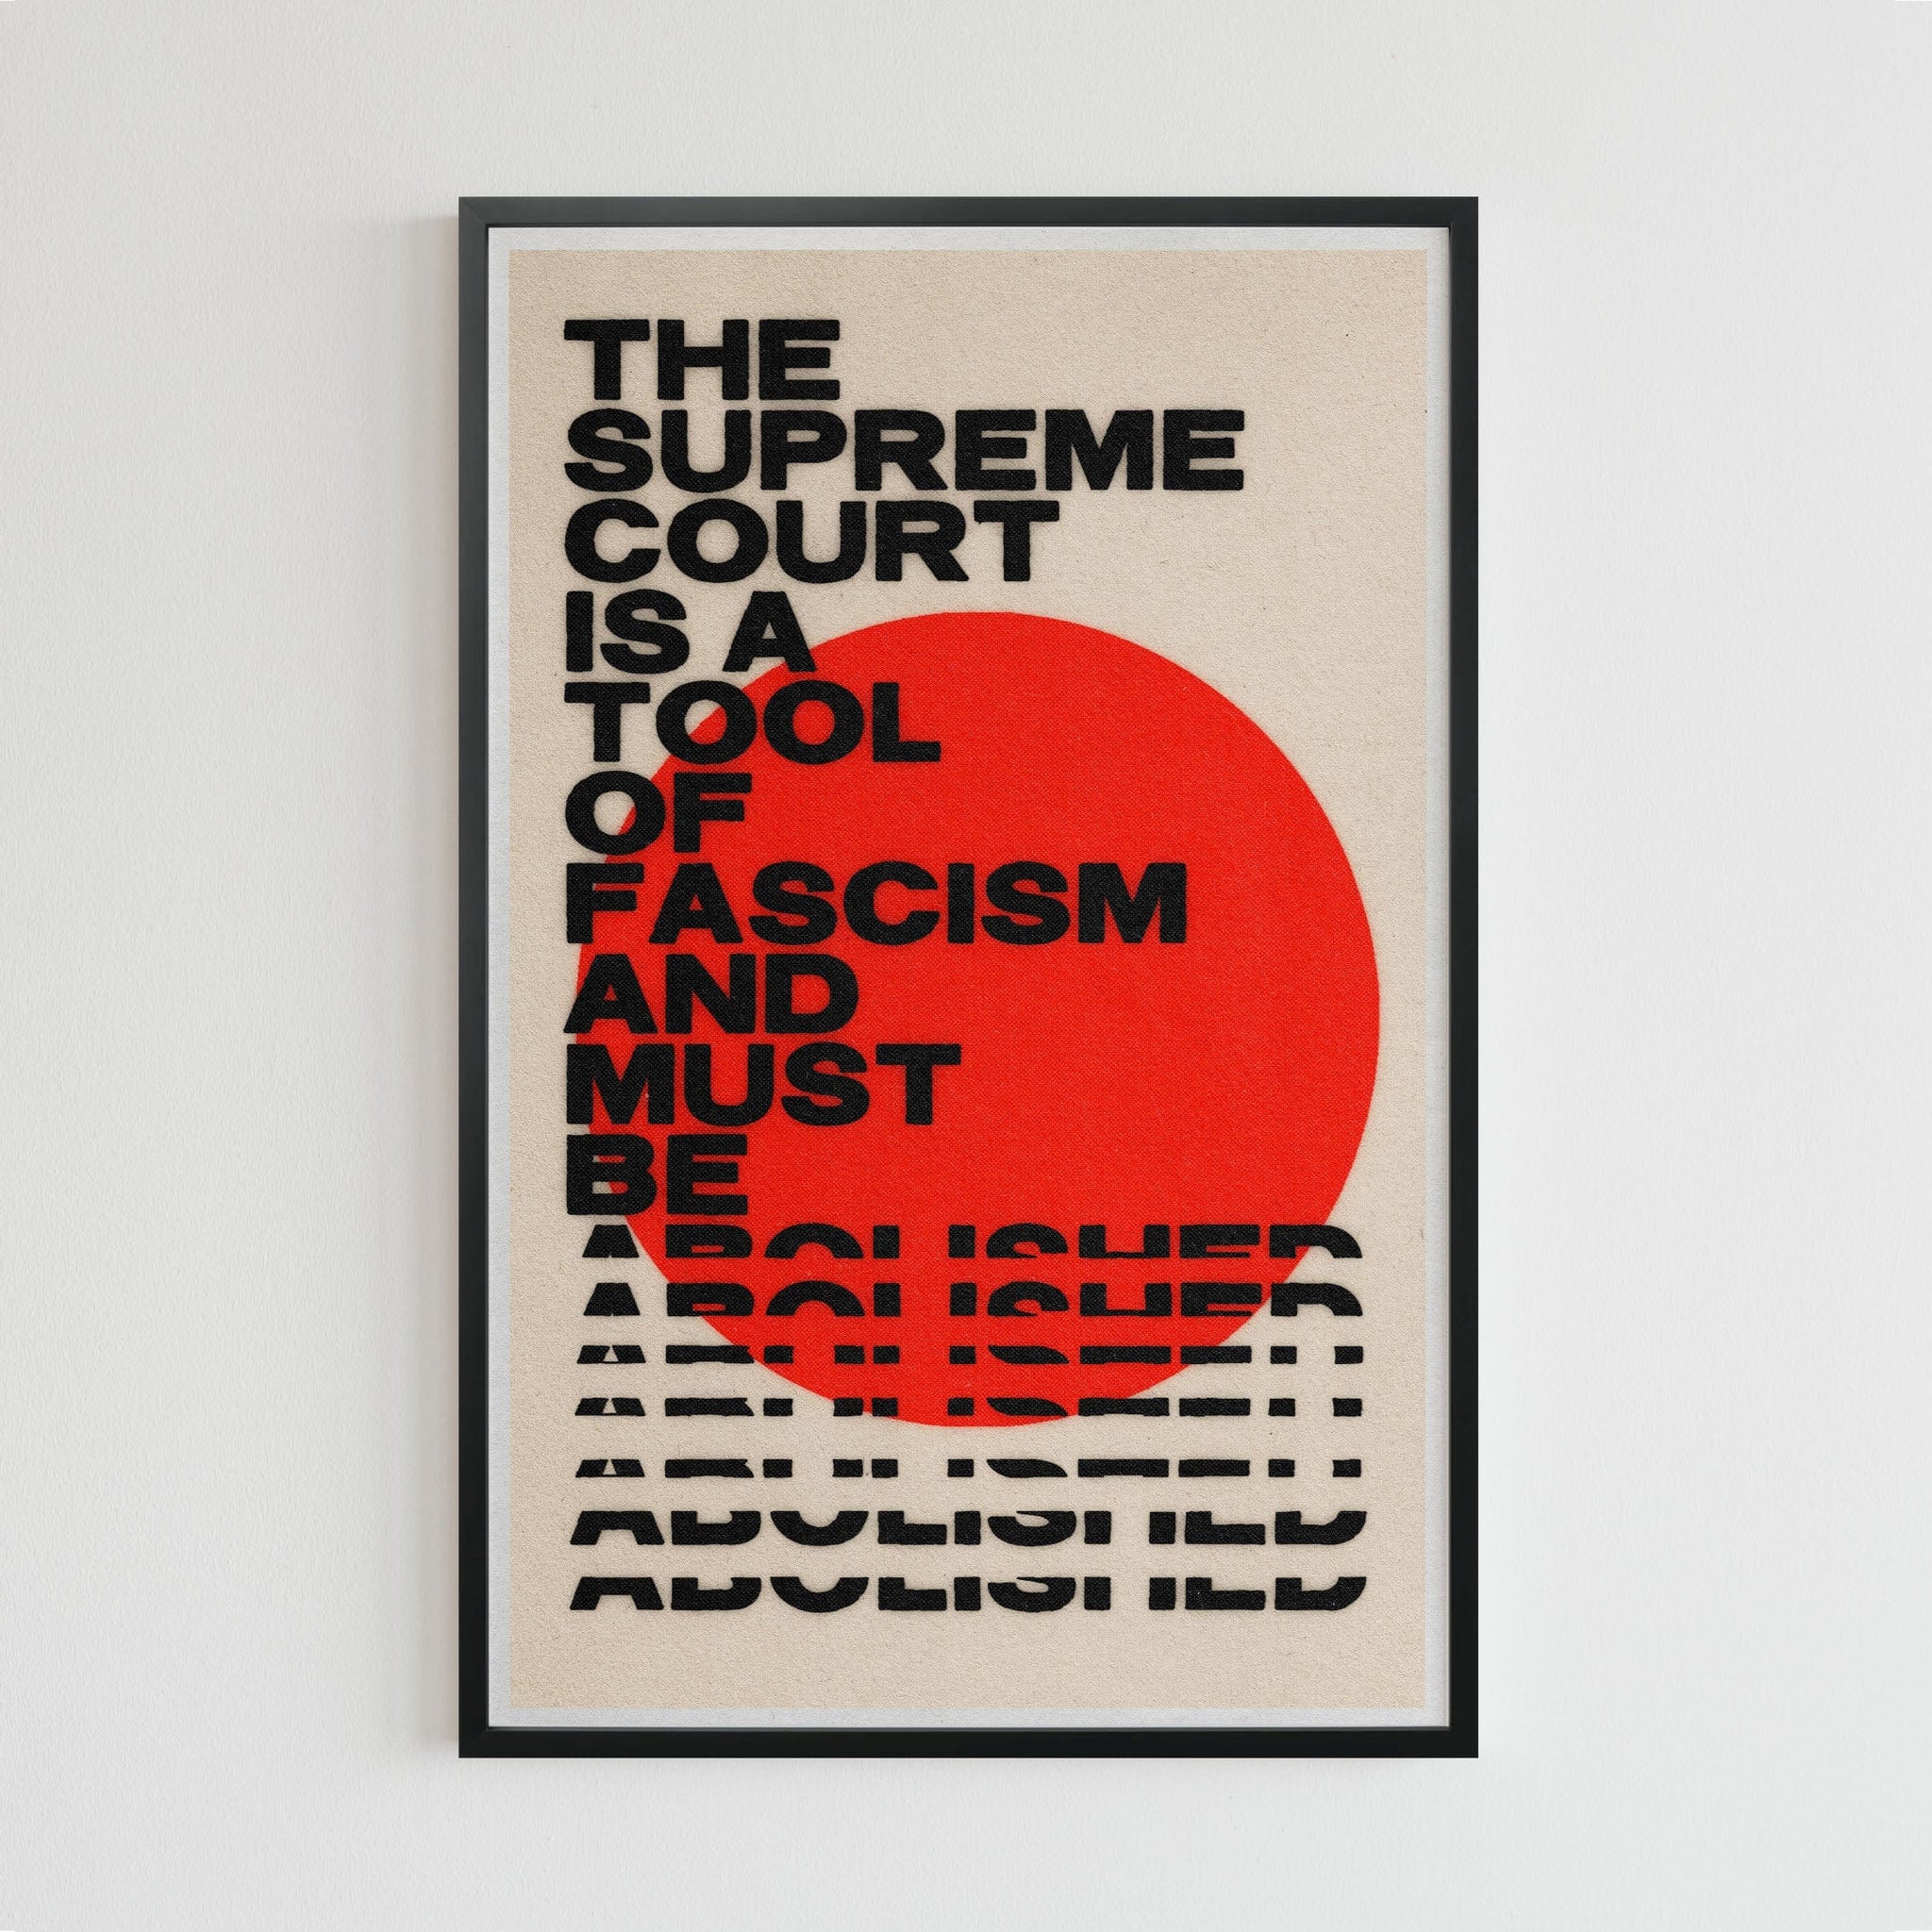 Abolish the Supreme Court (11 x 17 Poster print)